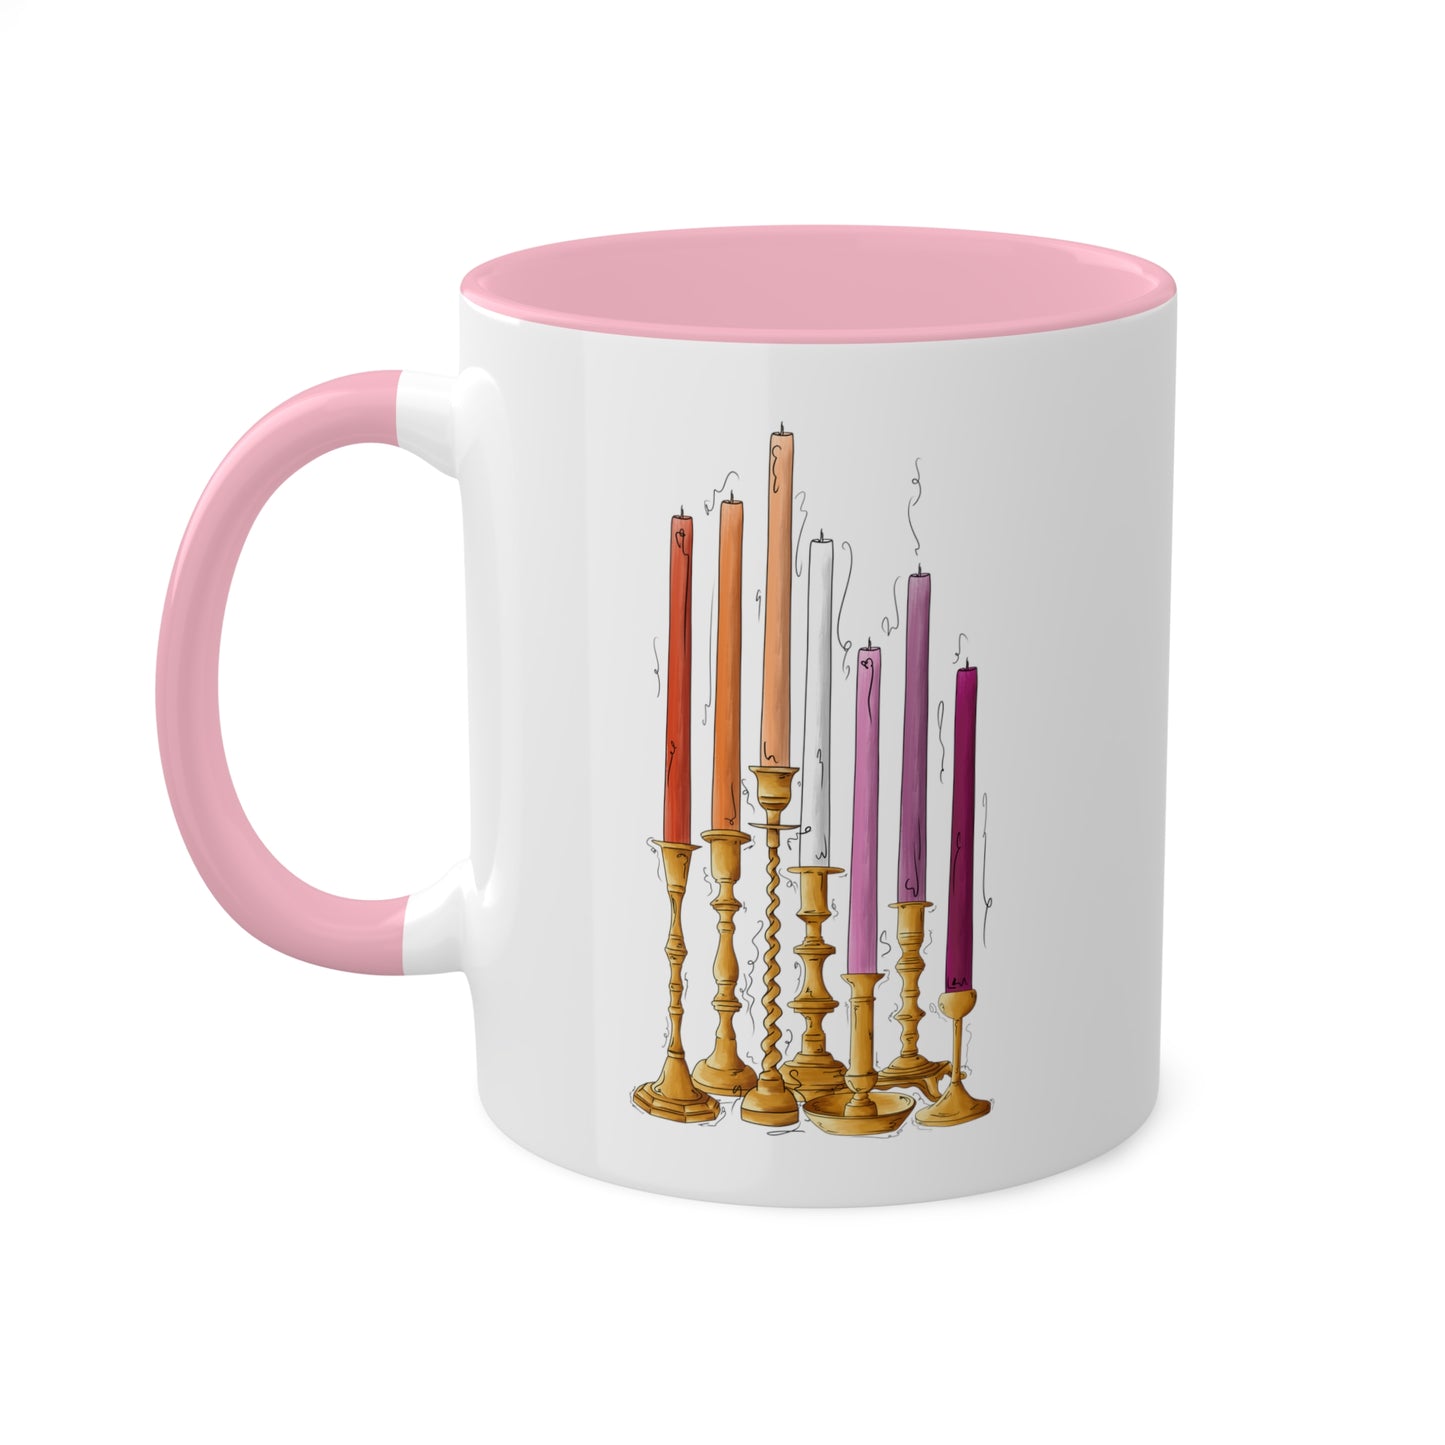 Lesbian Pride Flag Candlesticks - Mug